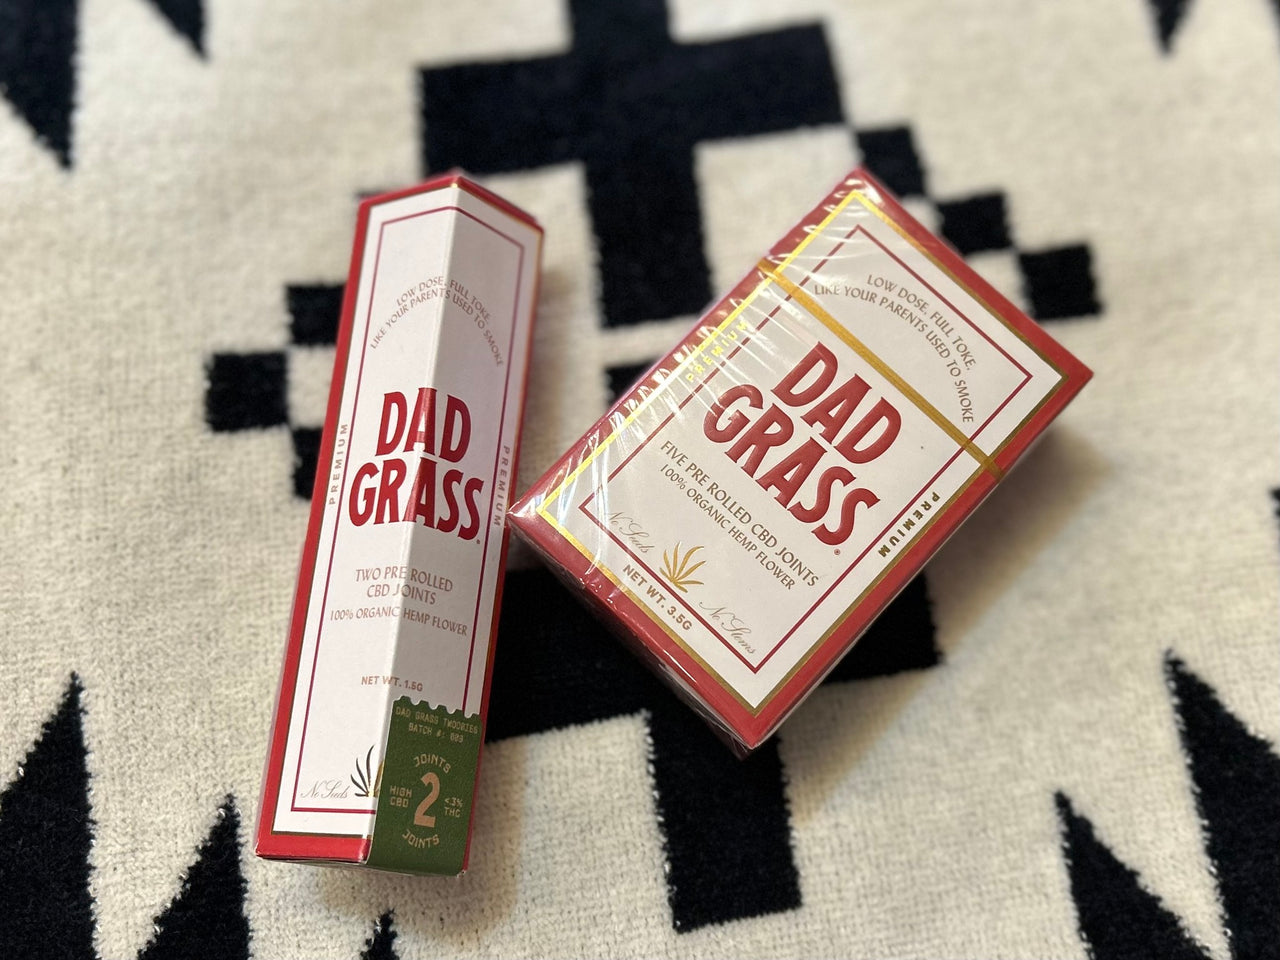 Dad Grass | The Twoobie Hemp CBD Preroll